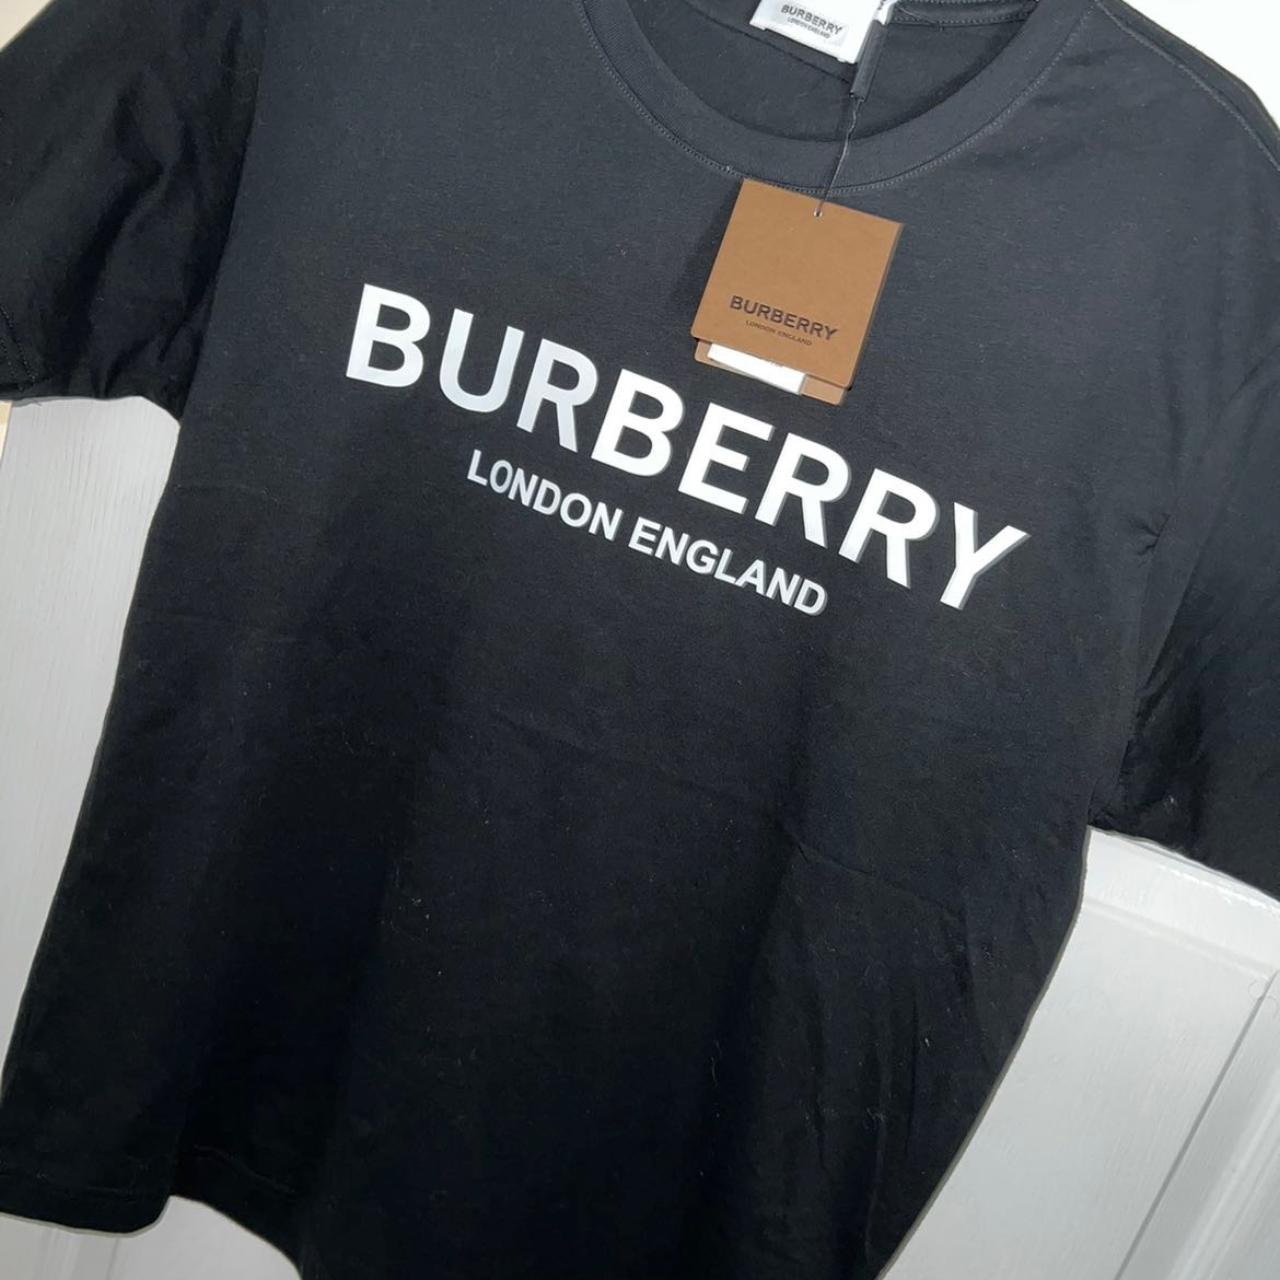 Burberry Men's White and Black T-shirt | Depop